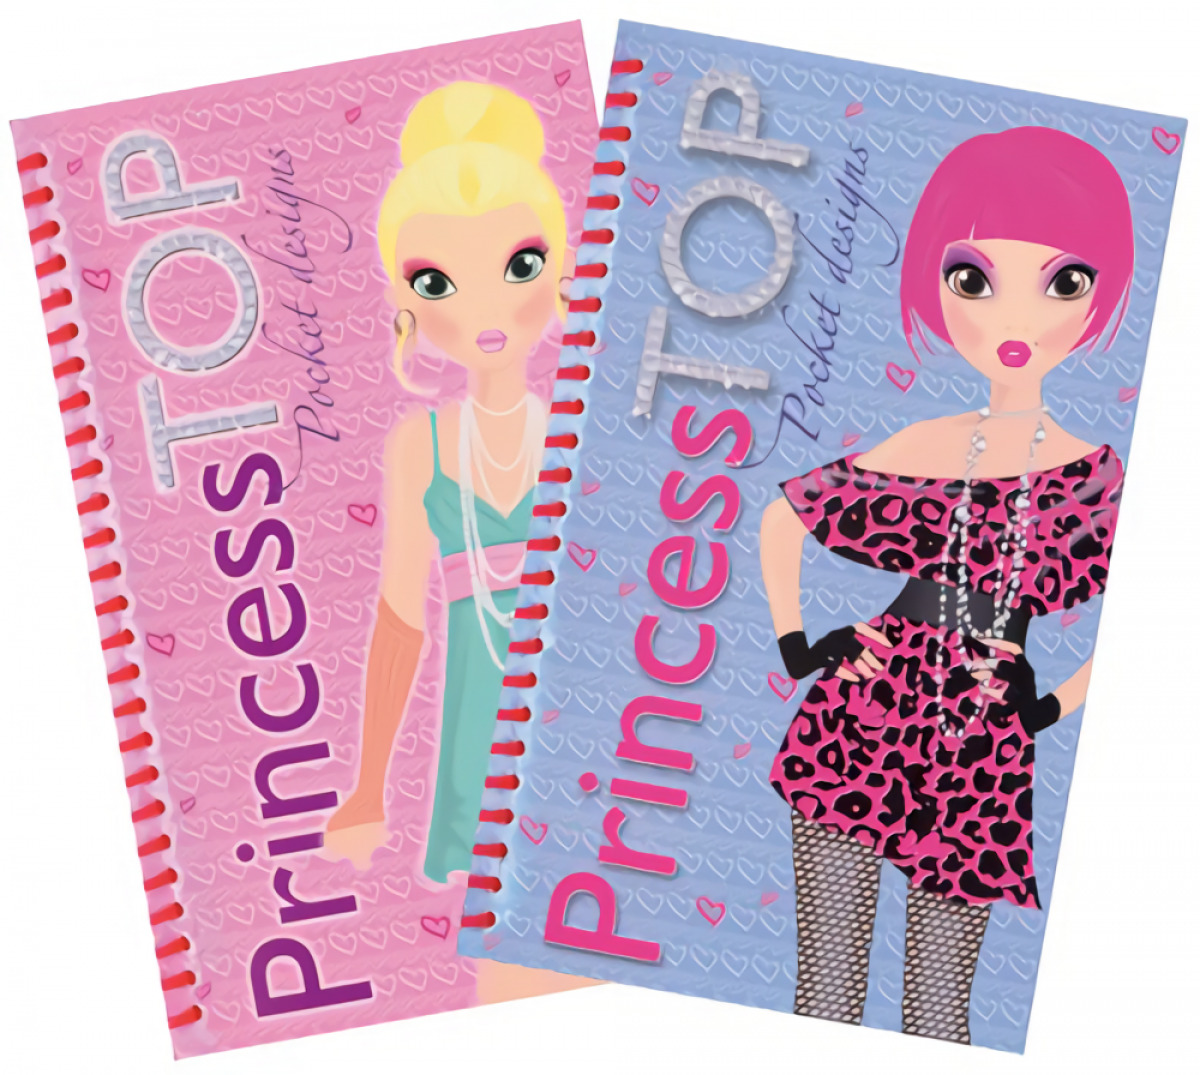 Princess top - pocket designs - Vv.Aa.